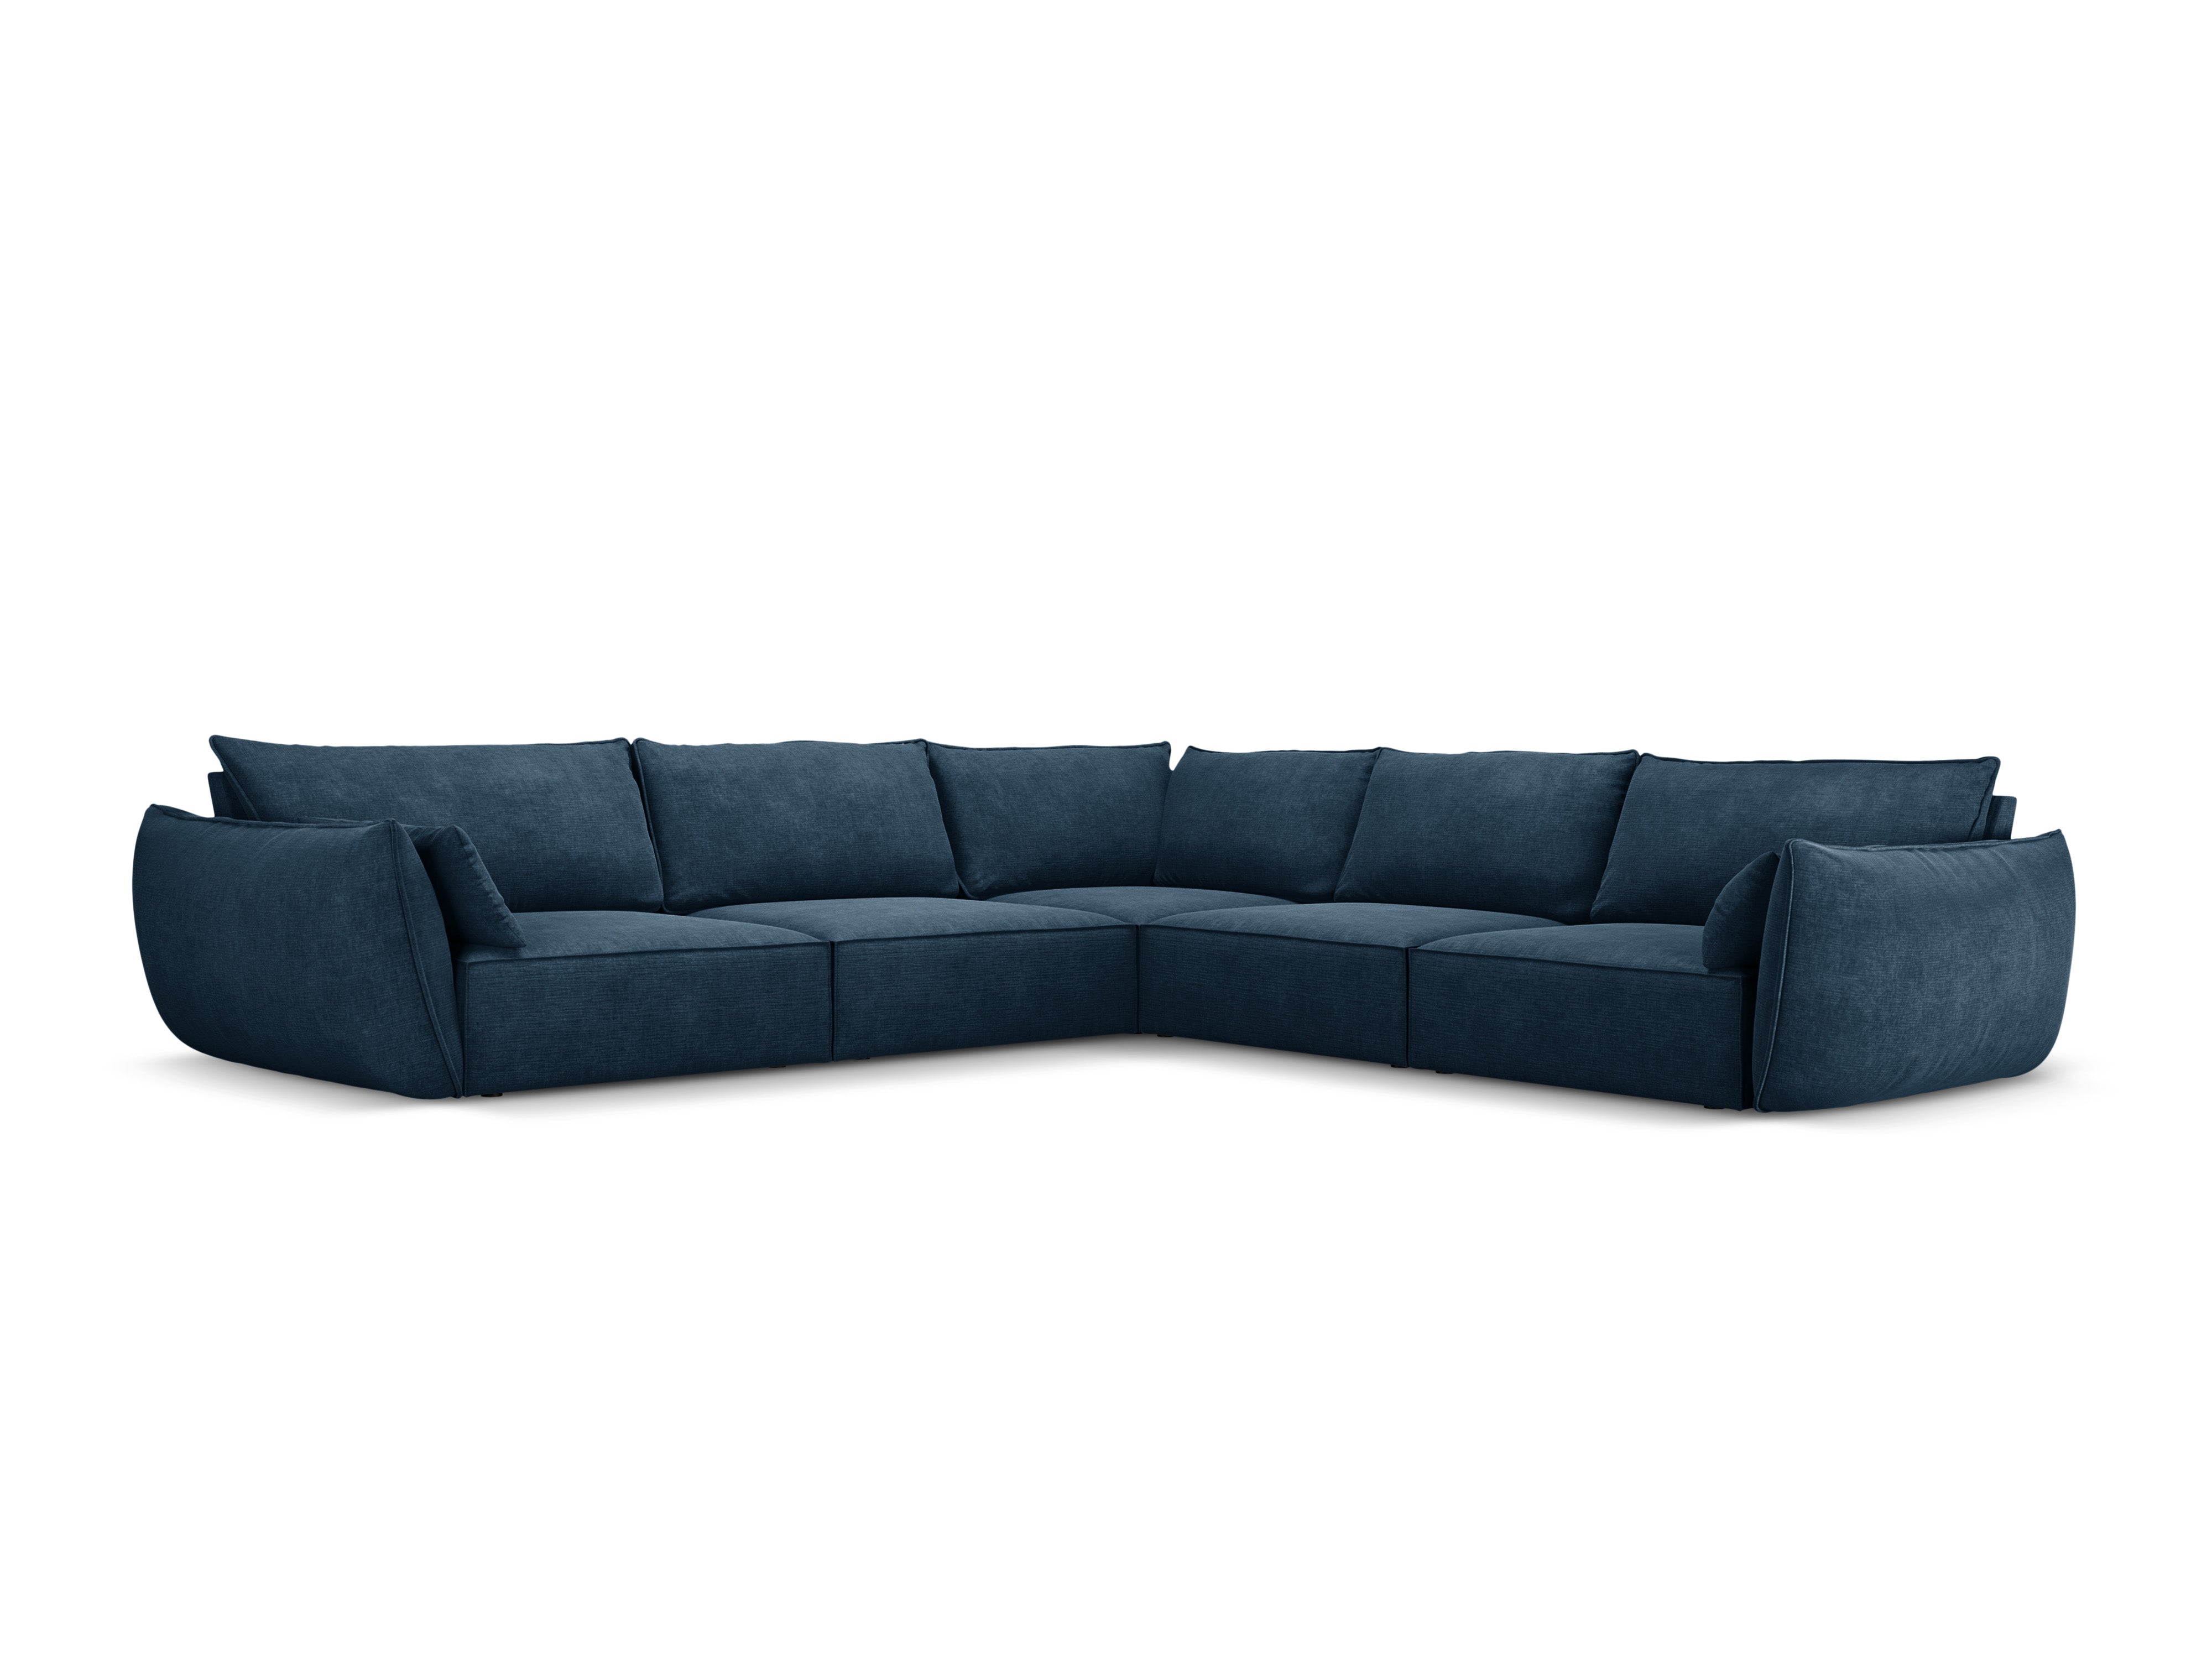 Symmetrical Corner Sofa, "Vanda", 7 Seats, 286x286x85
Made in Europe, Mazzini Sofas, Eye on Design